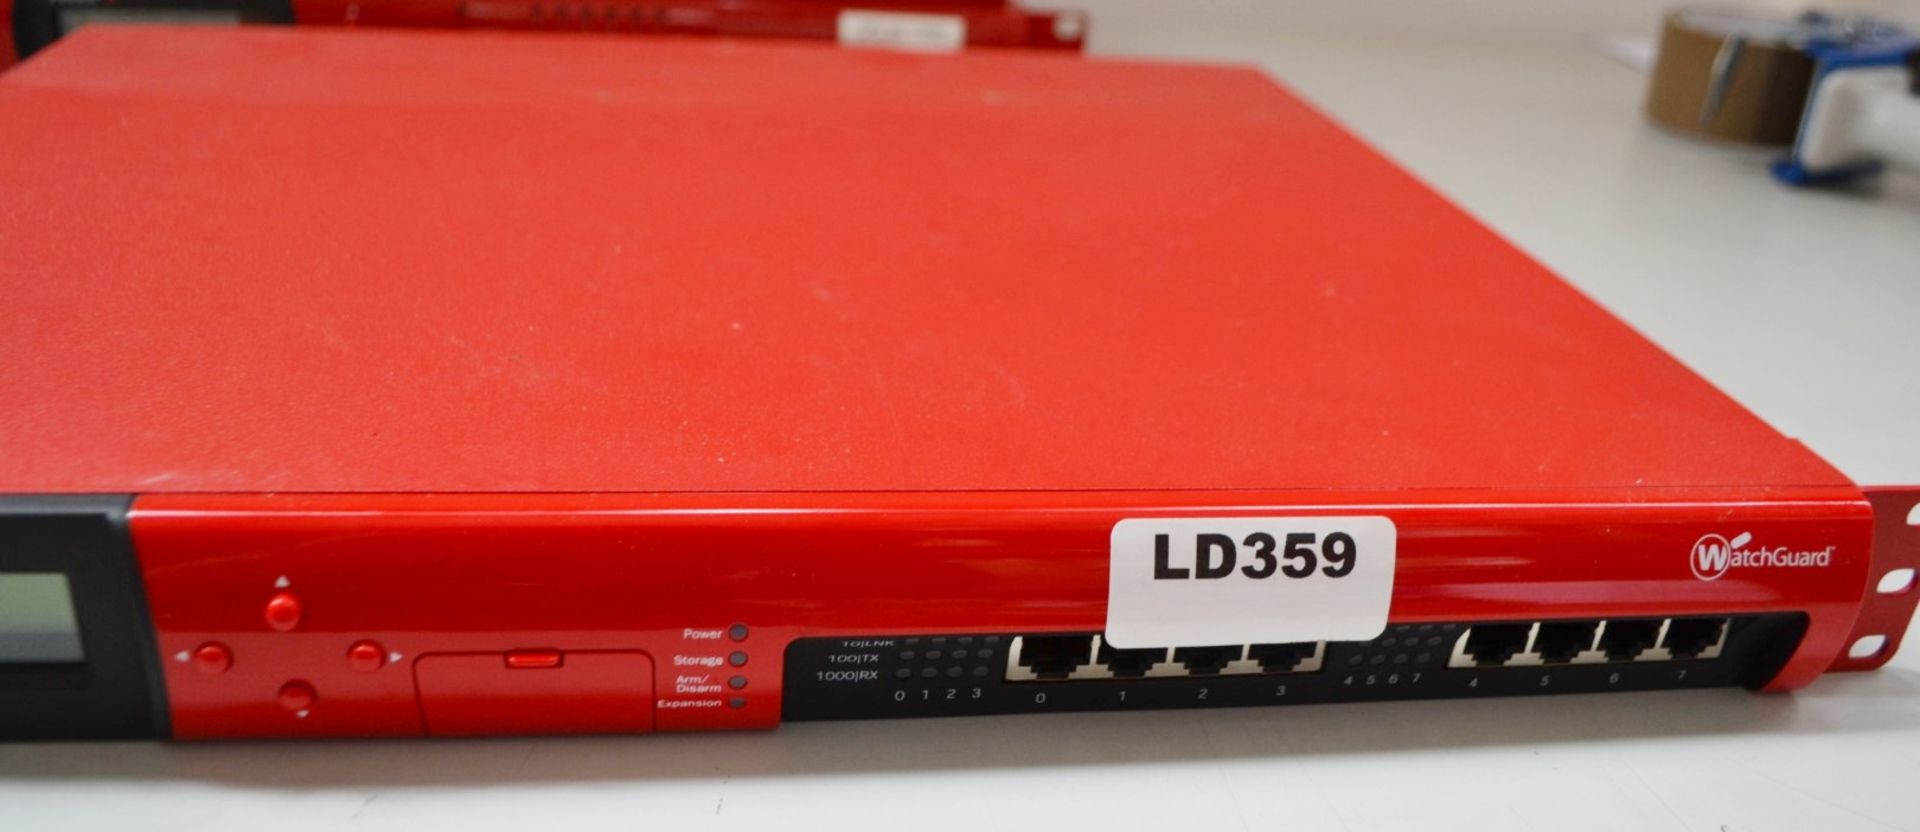 3 x Red Watchguard Firebox Security System's - Ref: LD359 - CL409 - Altrincham WA14 - Bild 10 aus 13